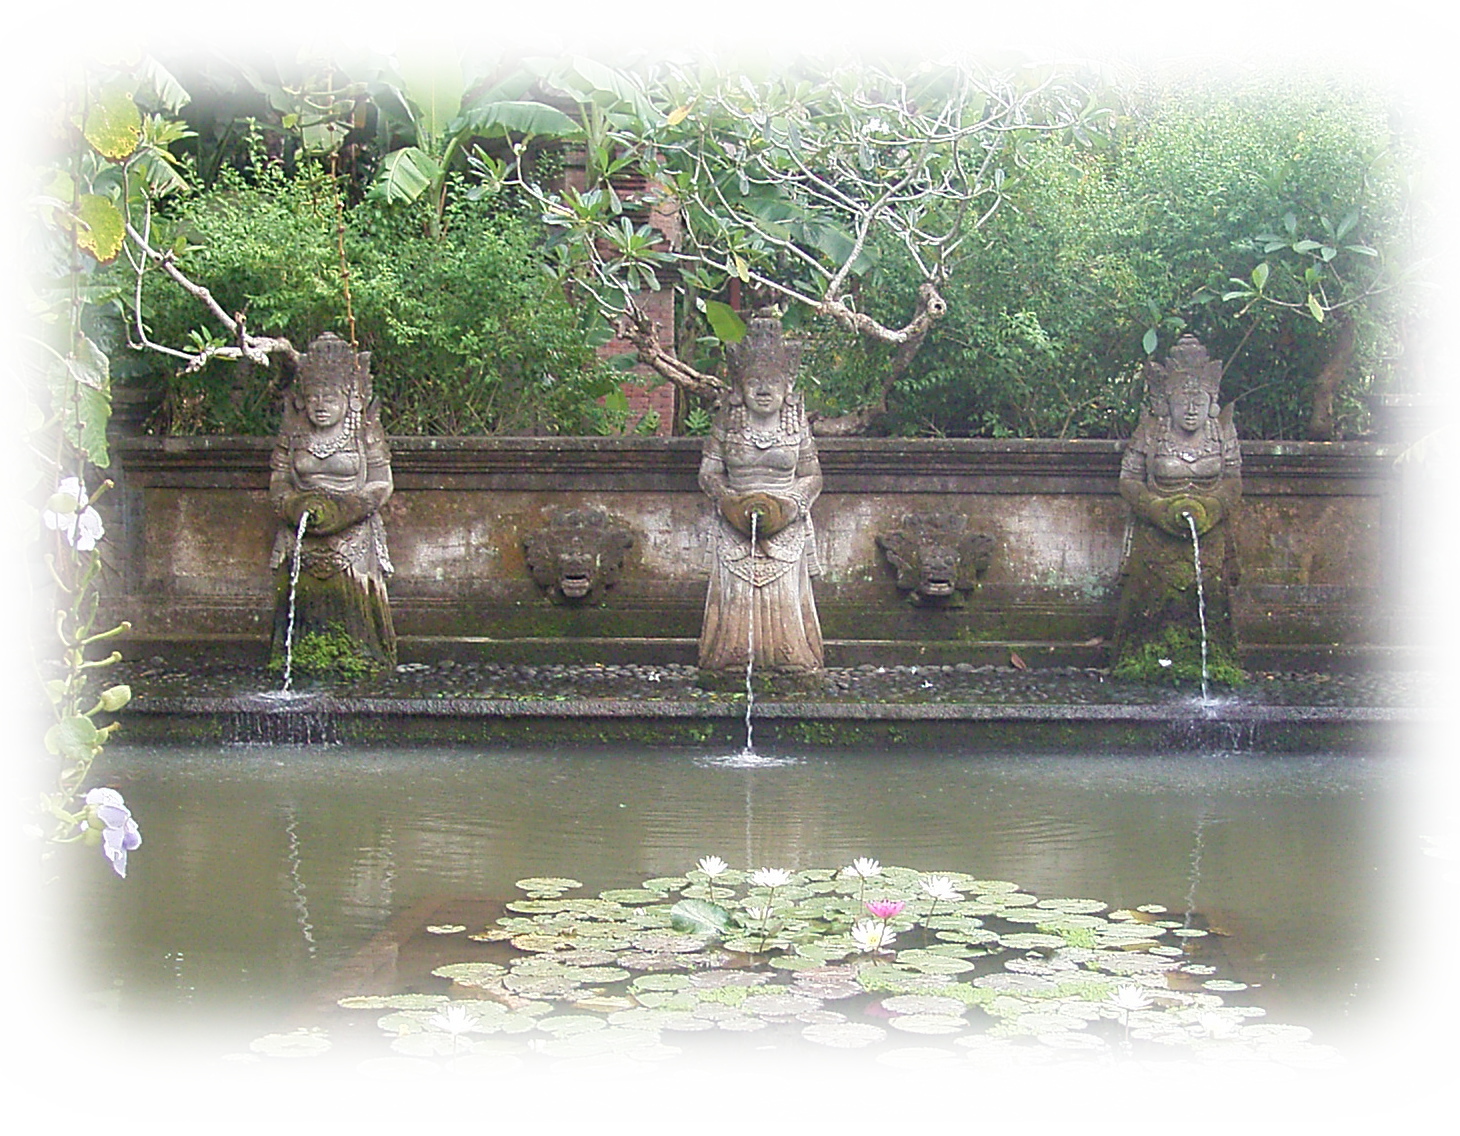 Arma Resort Hotel of Ubud, Bali: three Goddesses pouring water into the bathing pond